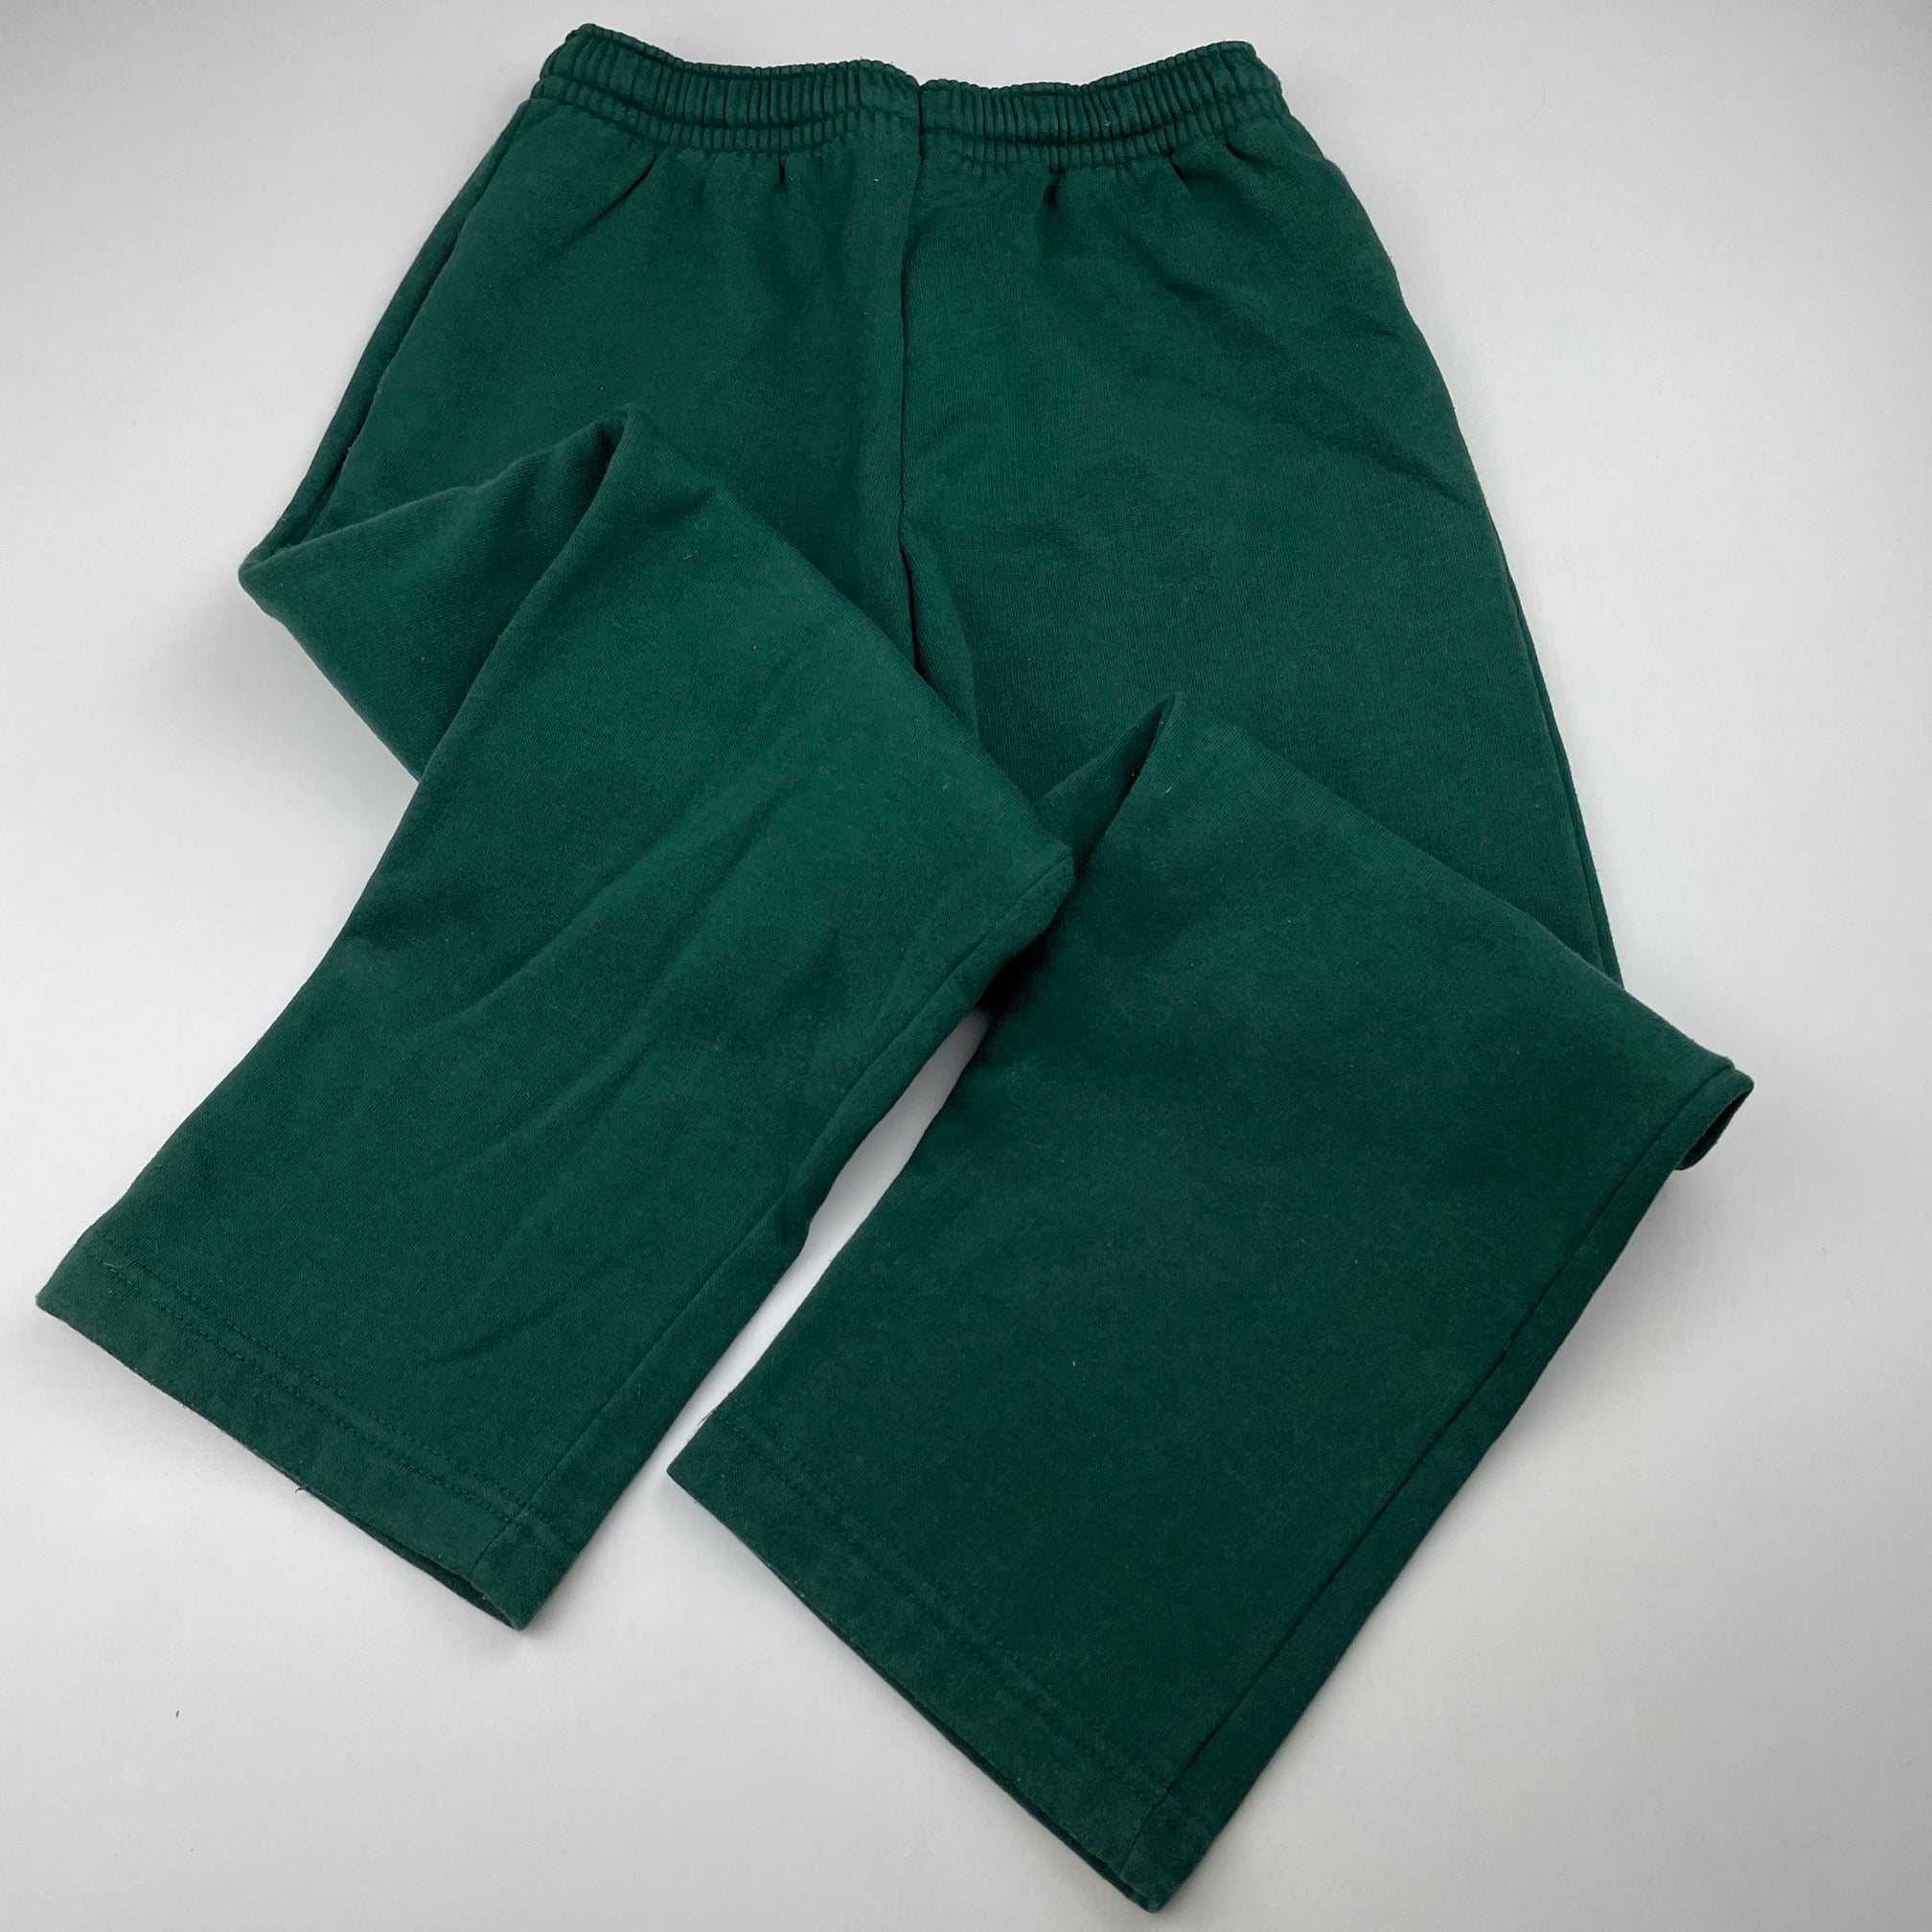 NEW Men's Fleece Lined Track Pants w Zip Pocket Striped Casual Track Suit  Pants - FIL